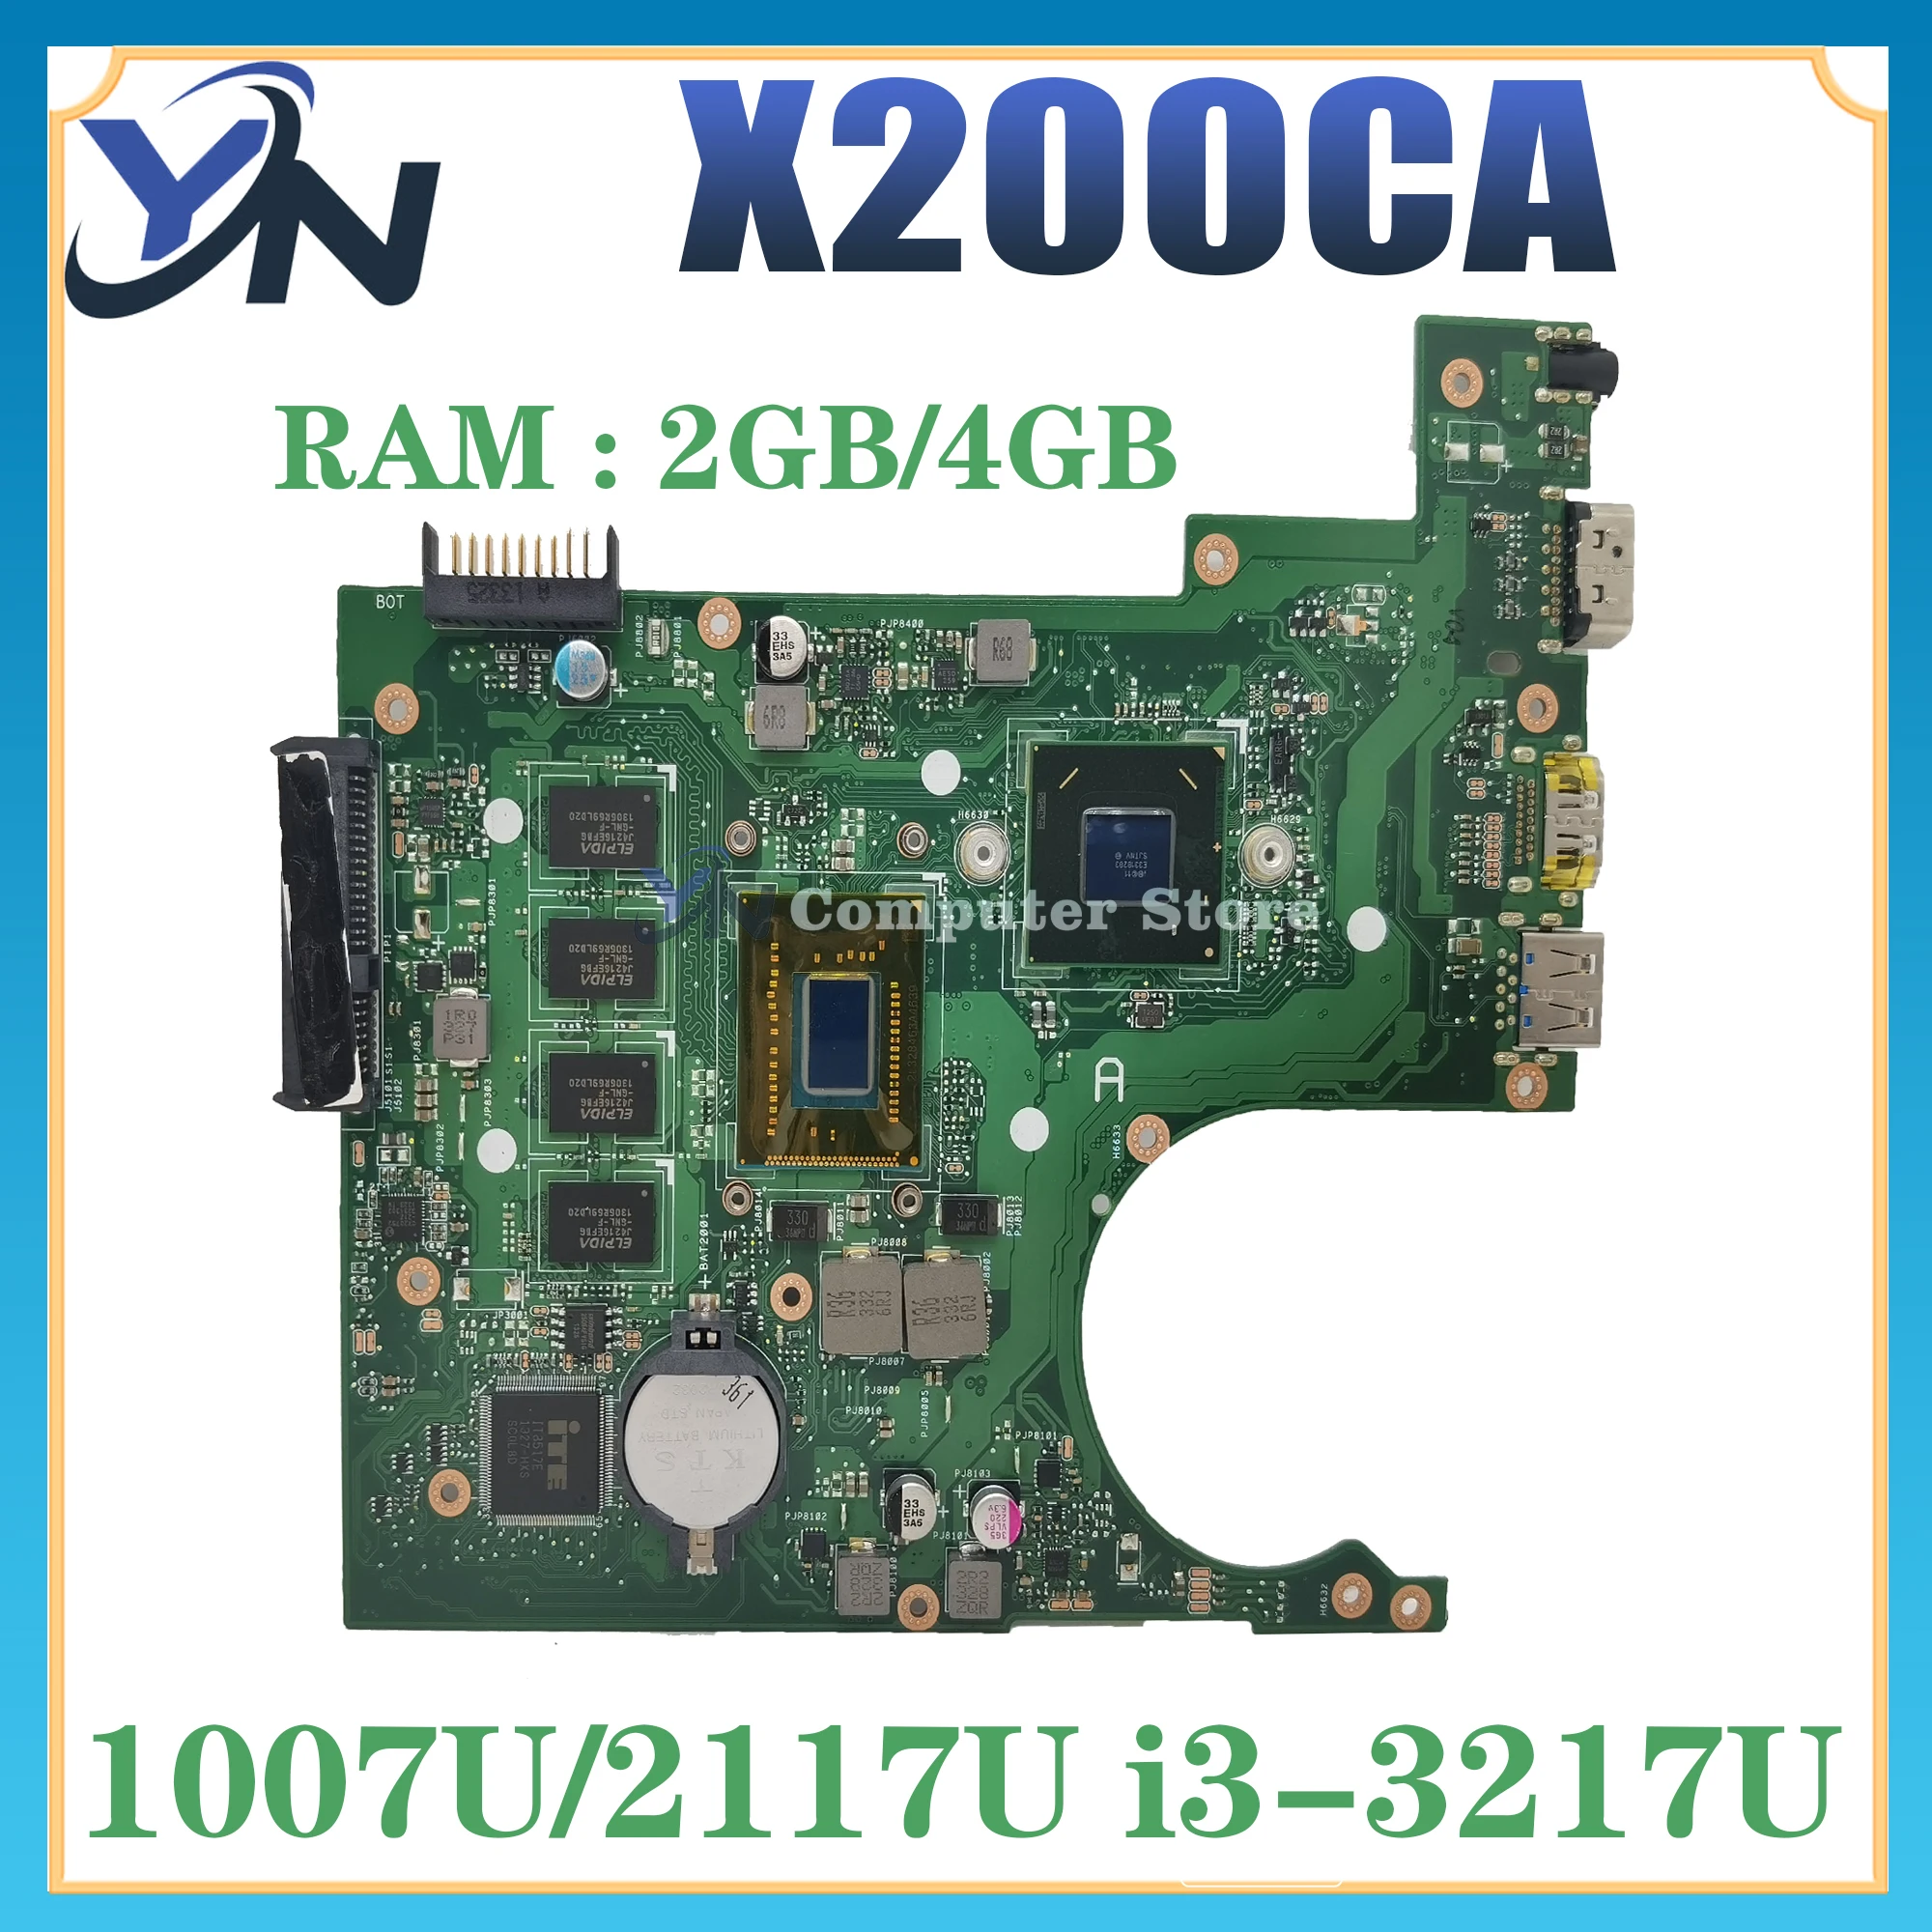 

X200C Notebook Mainboard For ASUS Vivobook F200CA X200CA Laptop Motherboard 1007U/2117U I3-3217U 2G/4G-RAM MAIN BOARD